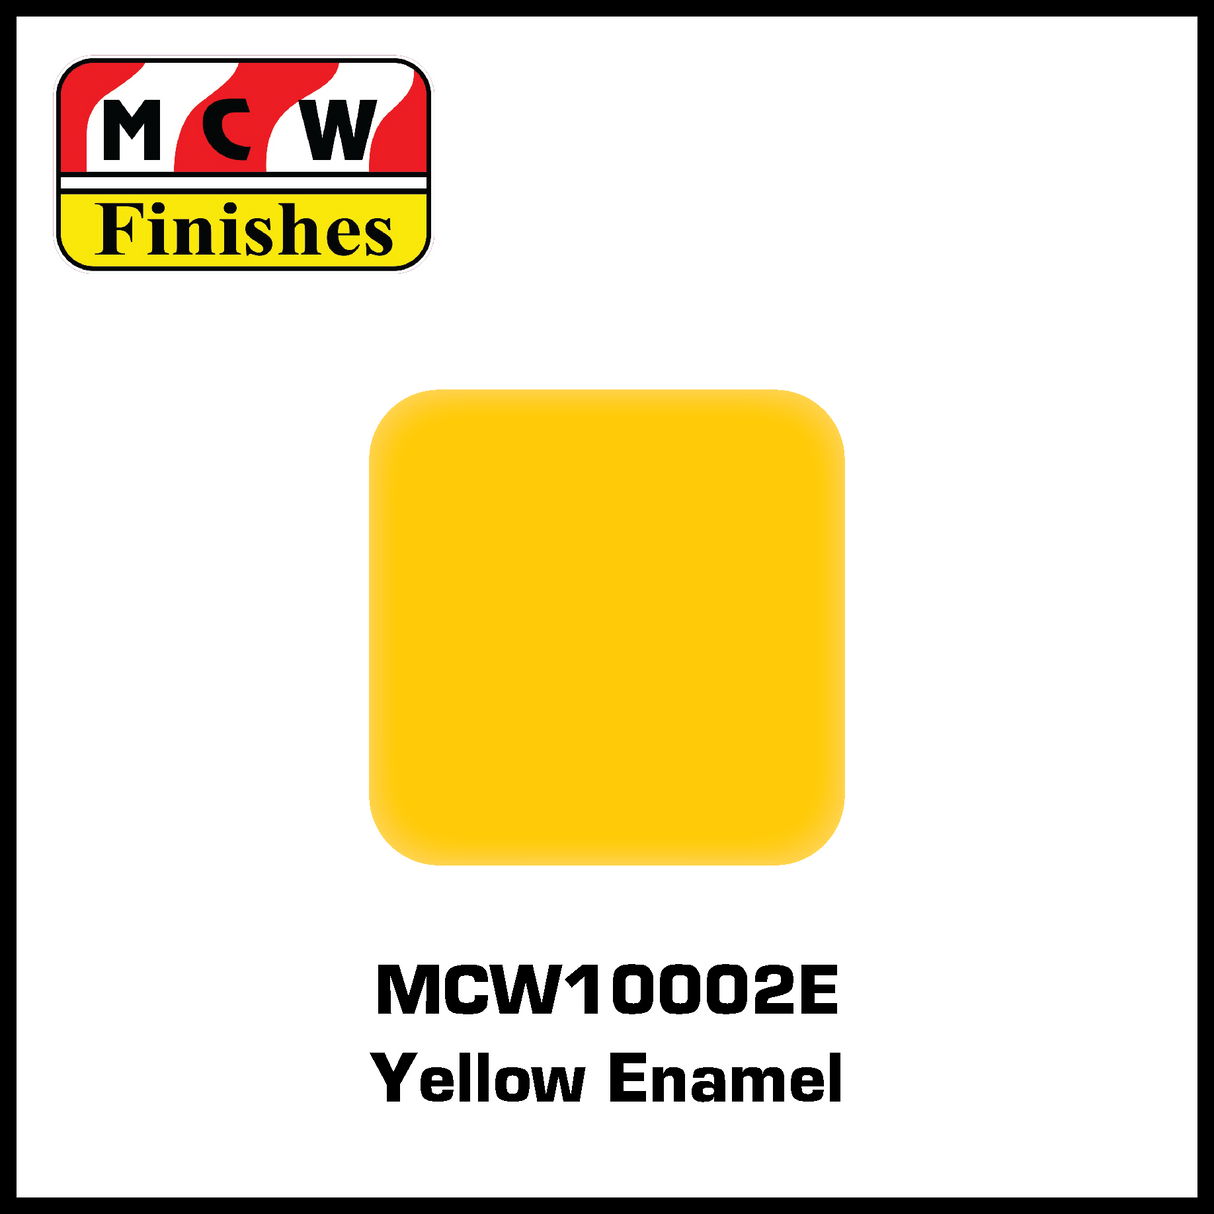 MCW Finishes Yellow Enamel